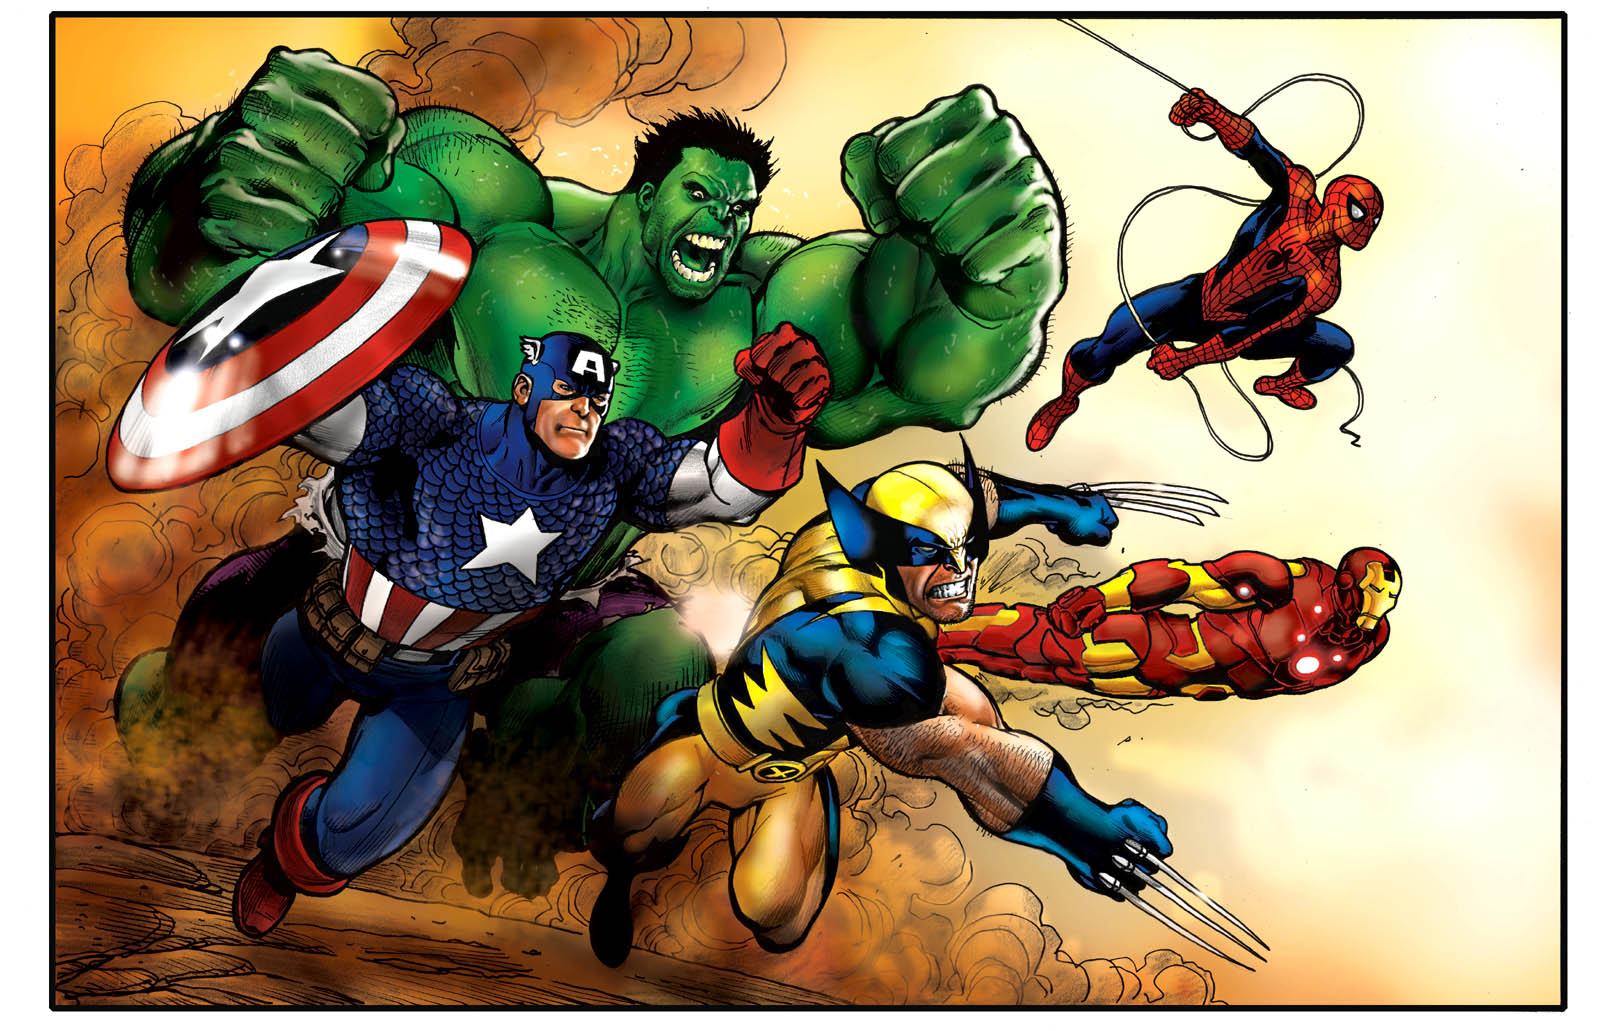 Скачать картинку Комиксы Марвел, Росомаха, Капитан Америка, Халк, Человек Паук, Железный Человек, Комиксы в телефон бесплатно.